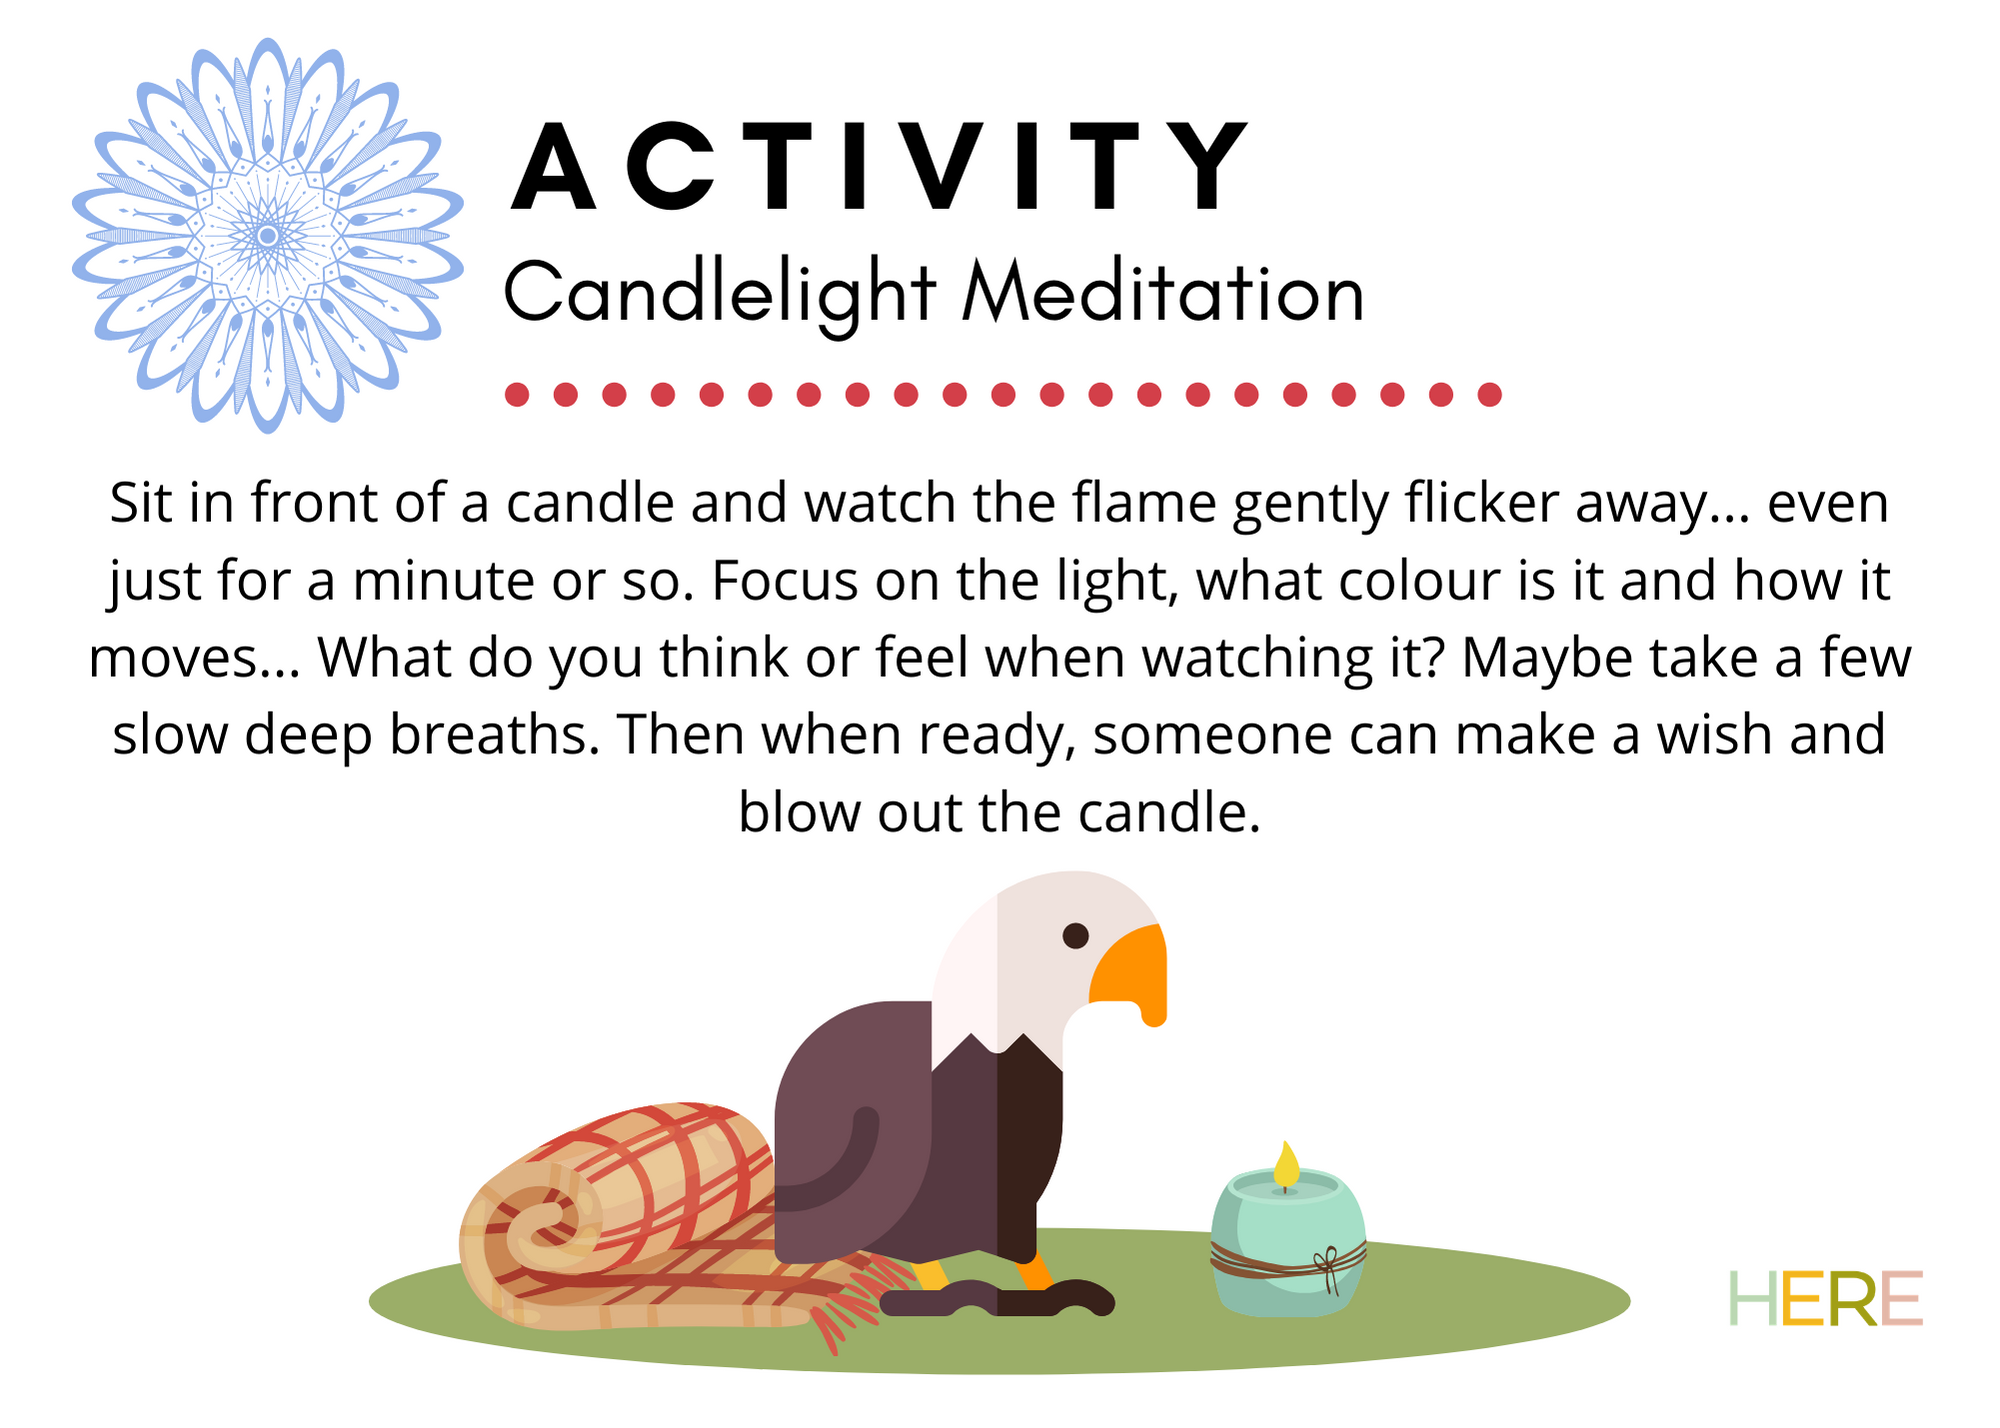 Eagle Theme Candlelight Meditation Activity.png